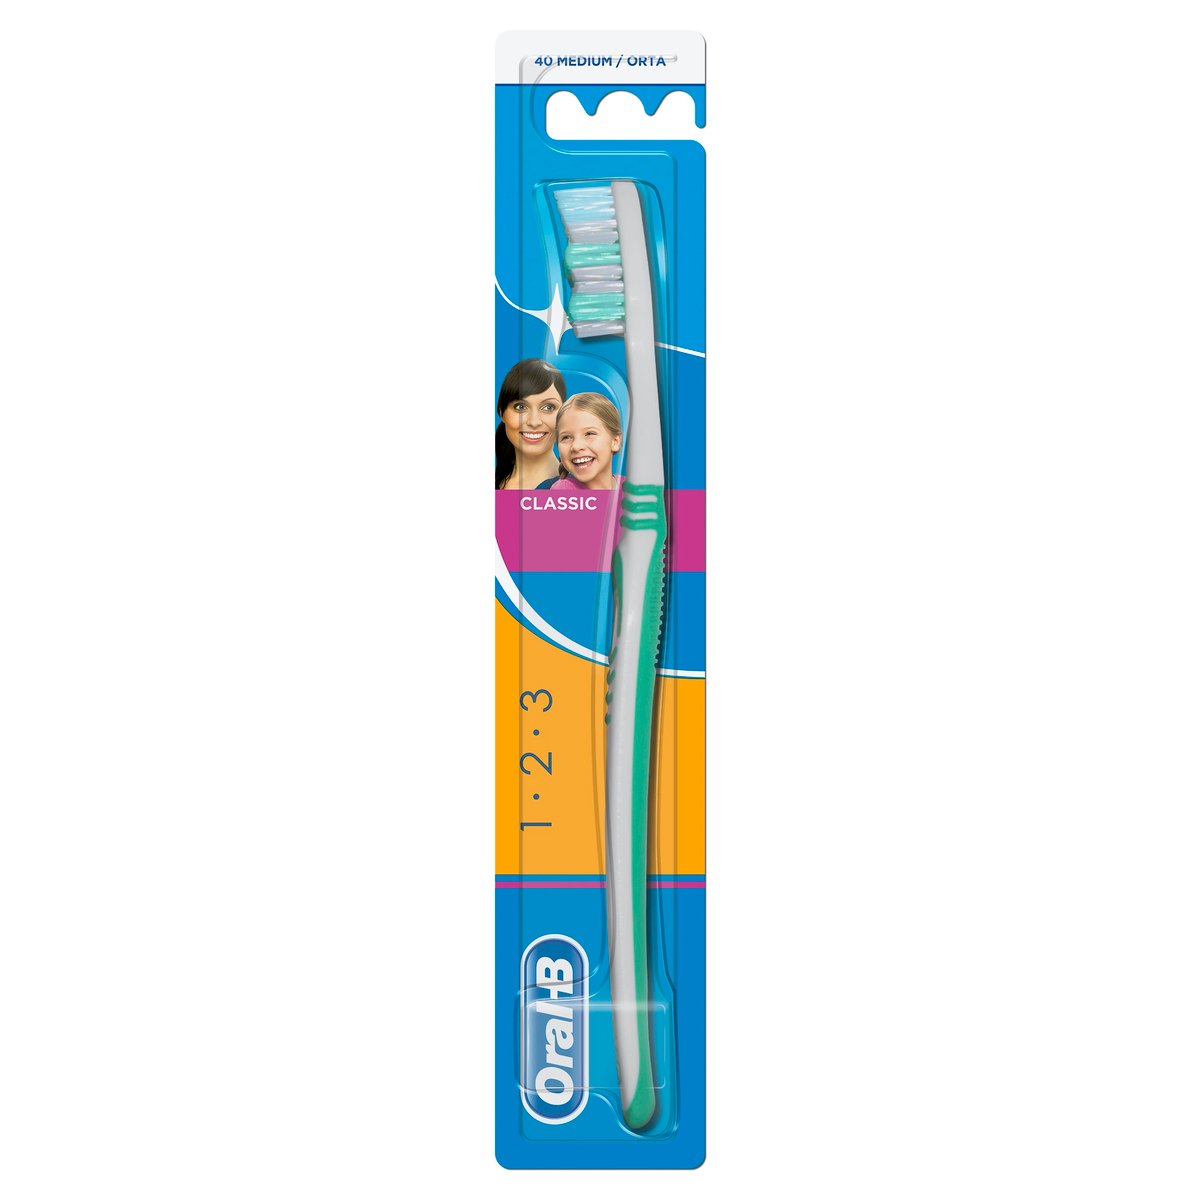 Oral-B 123 Classic Toothbrush - Medium Assorted Colour 1pc